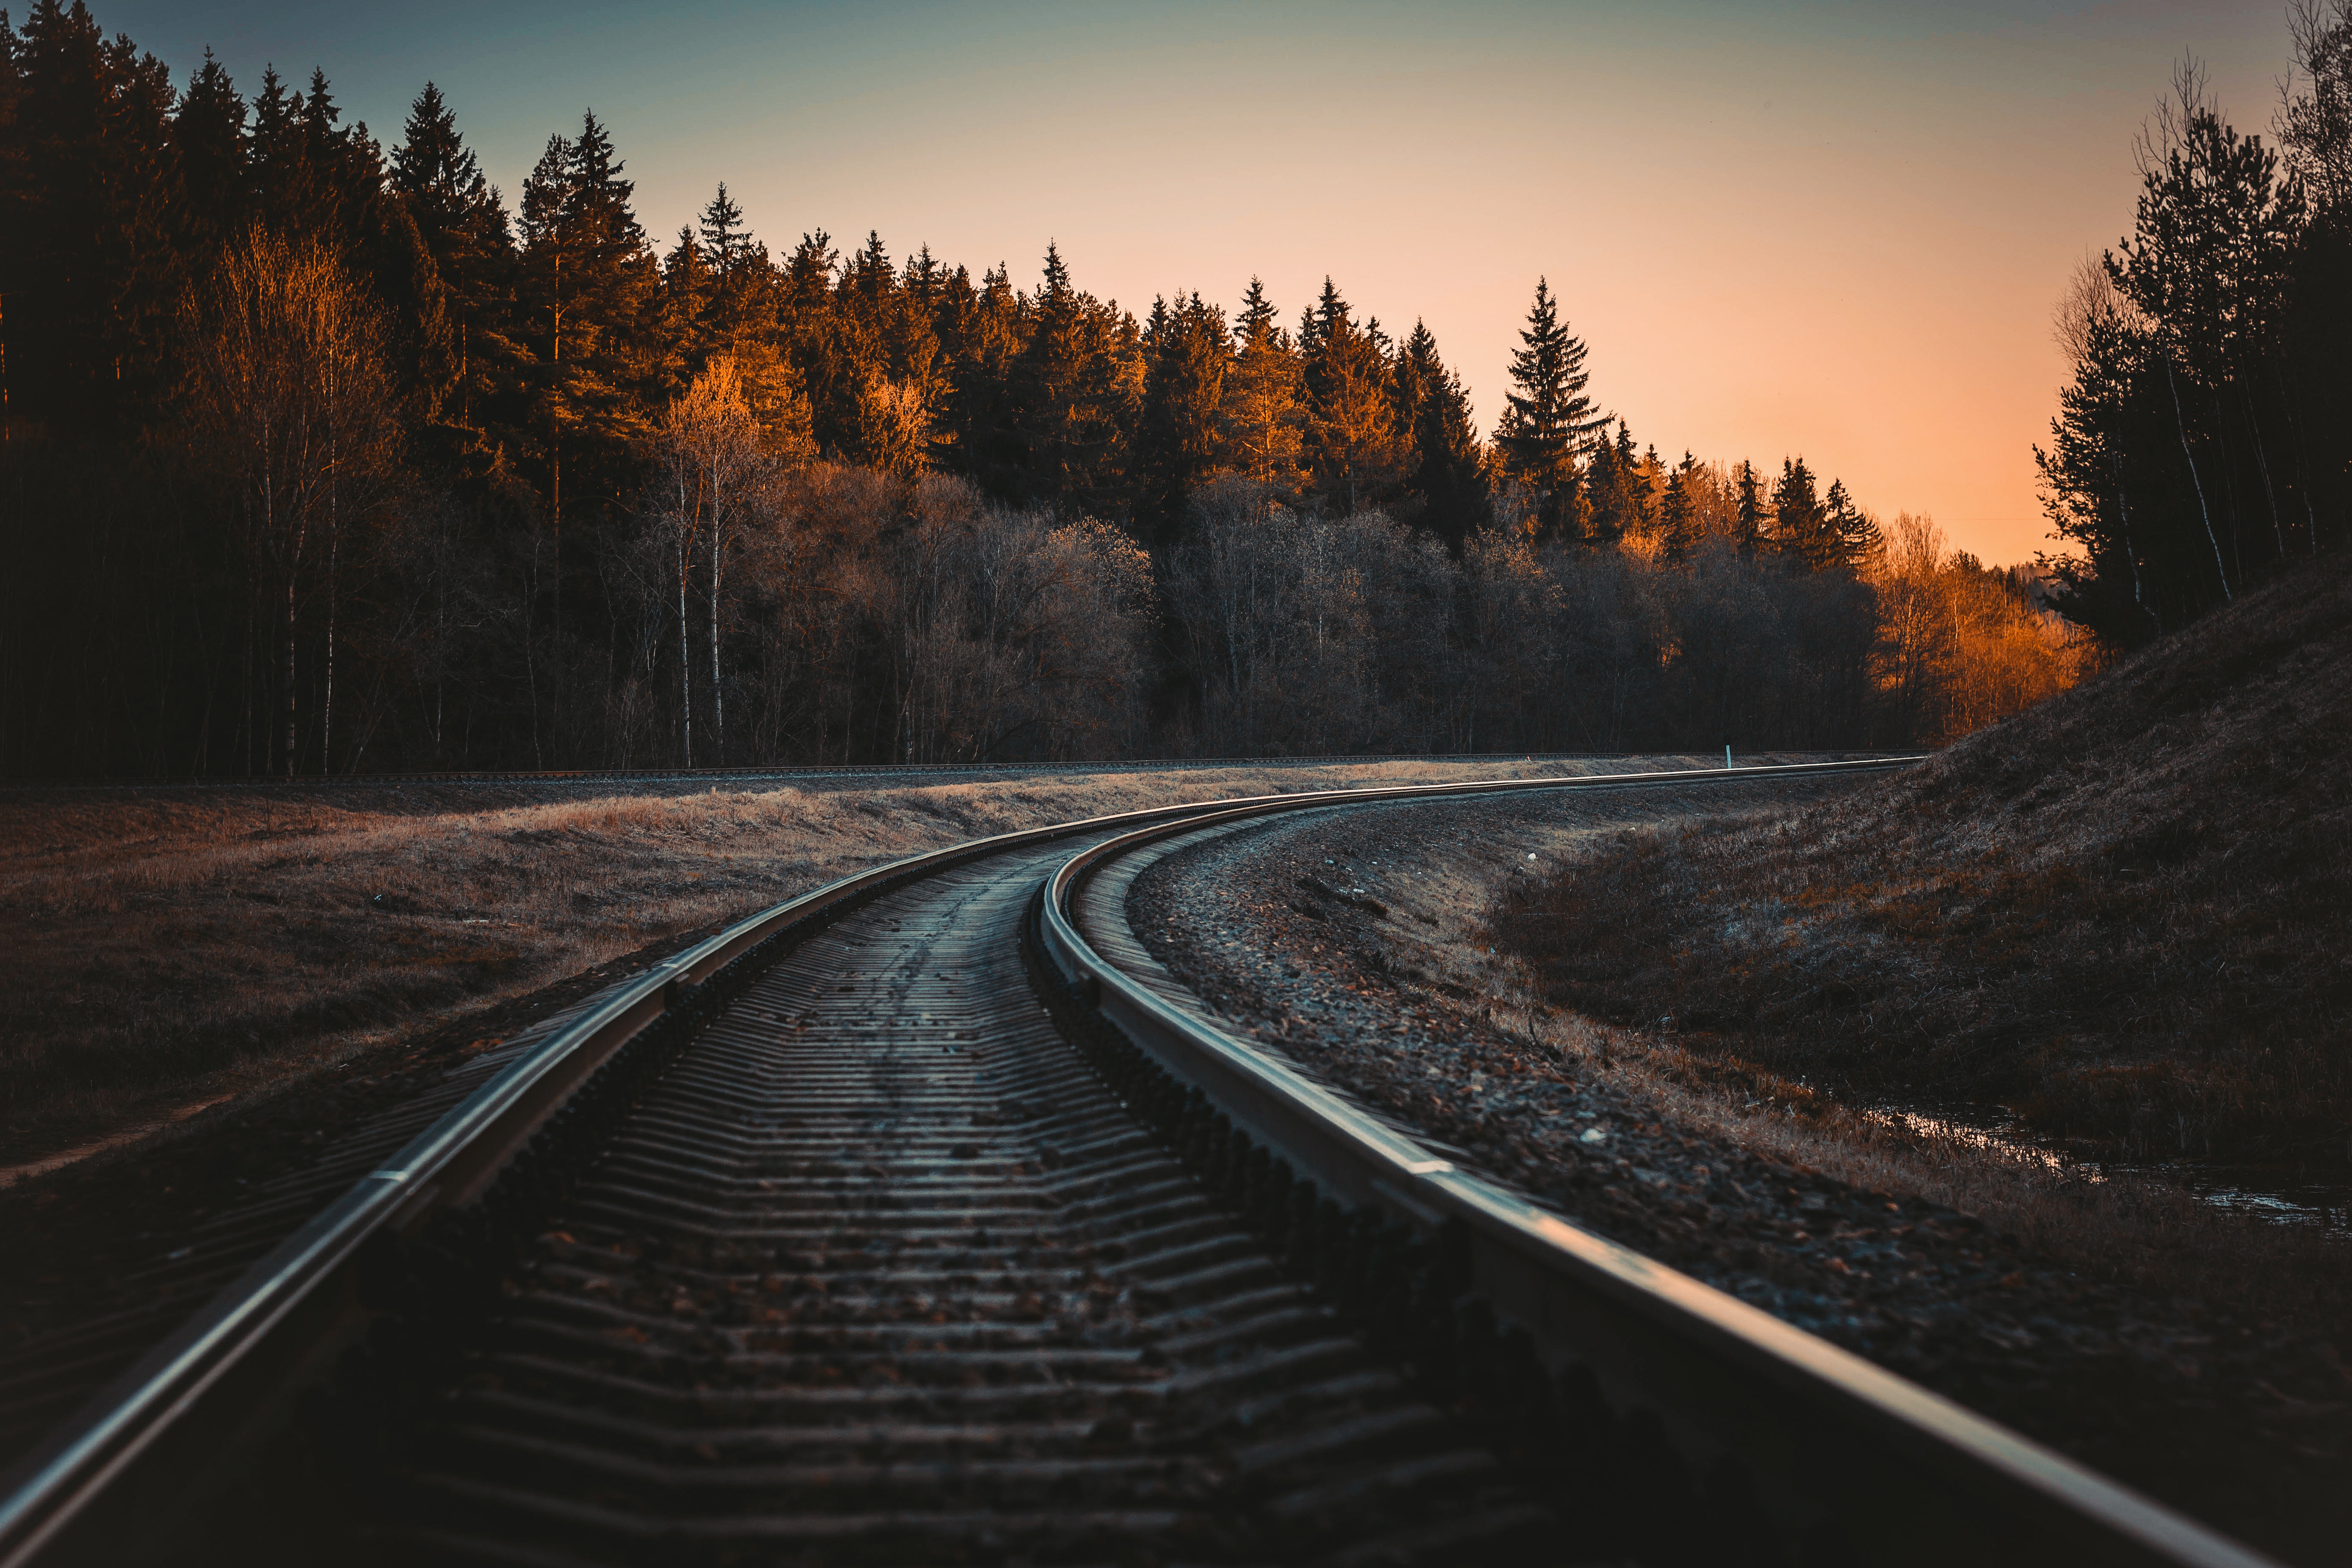 Train rail during golden hour photo